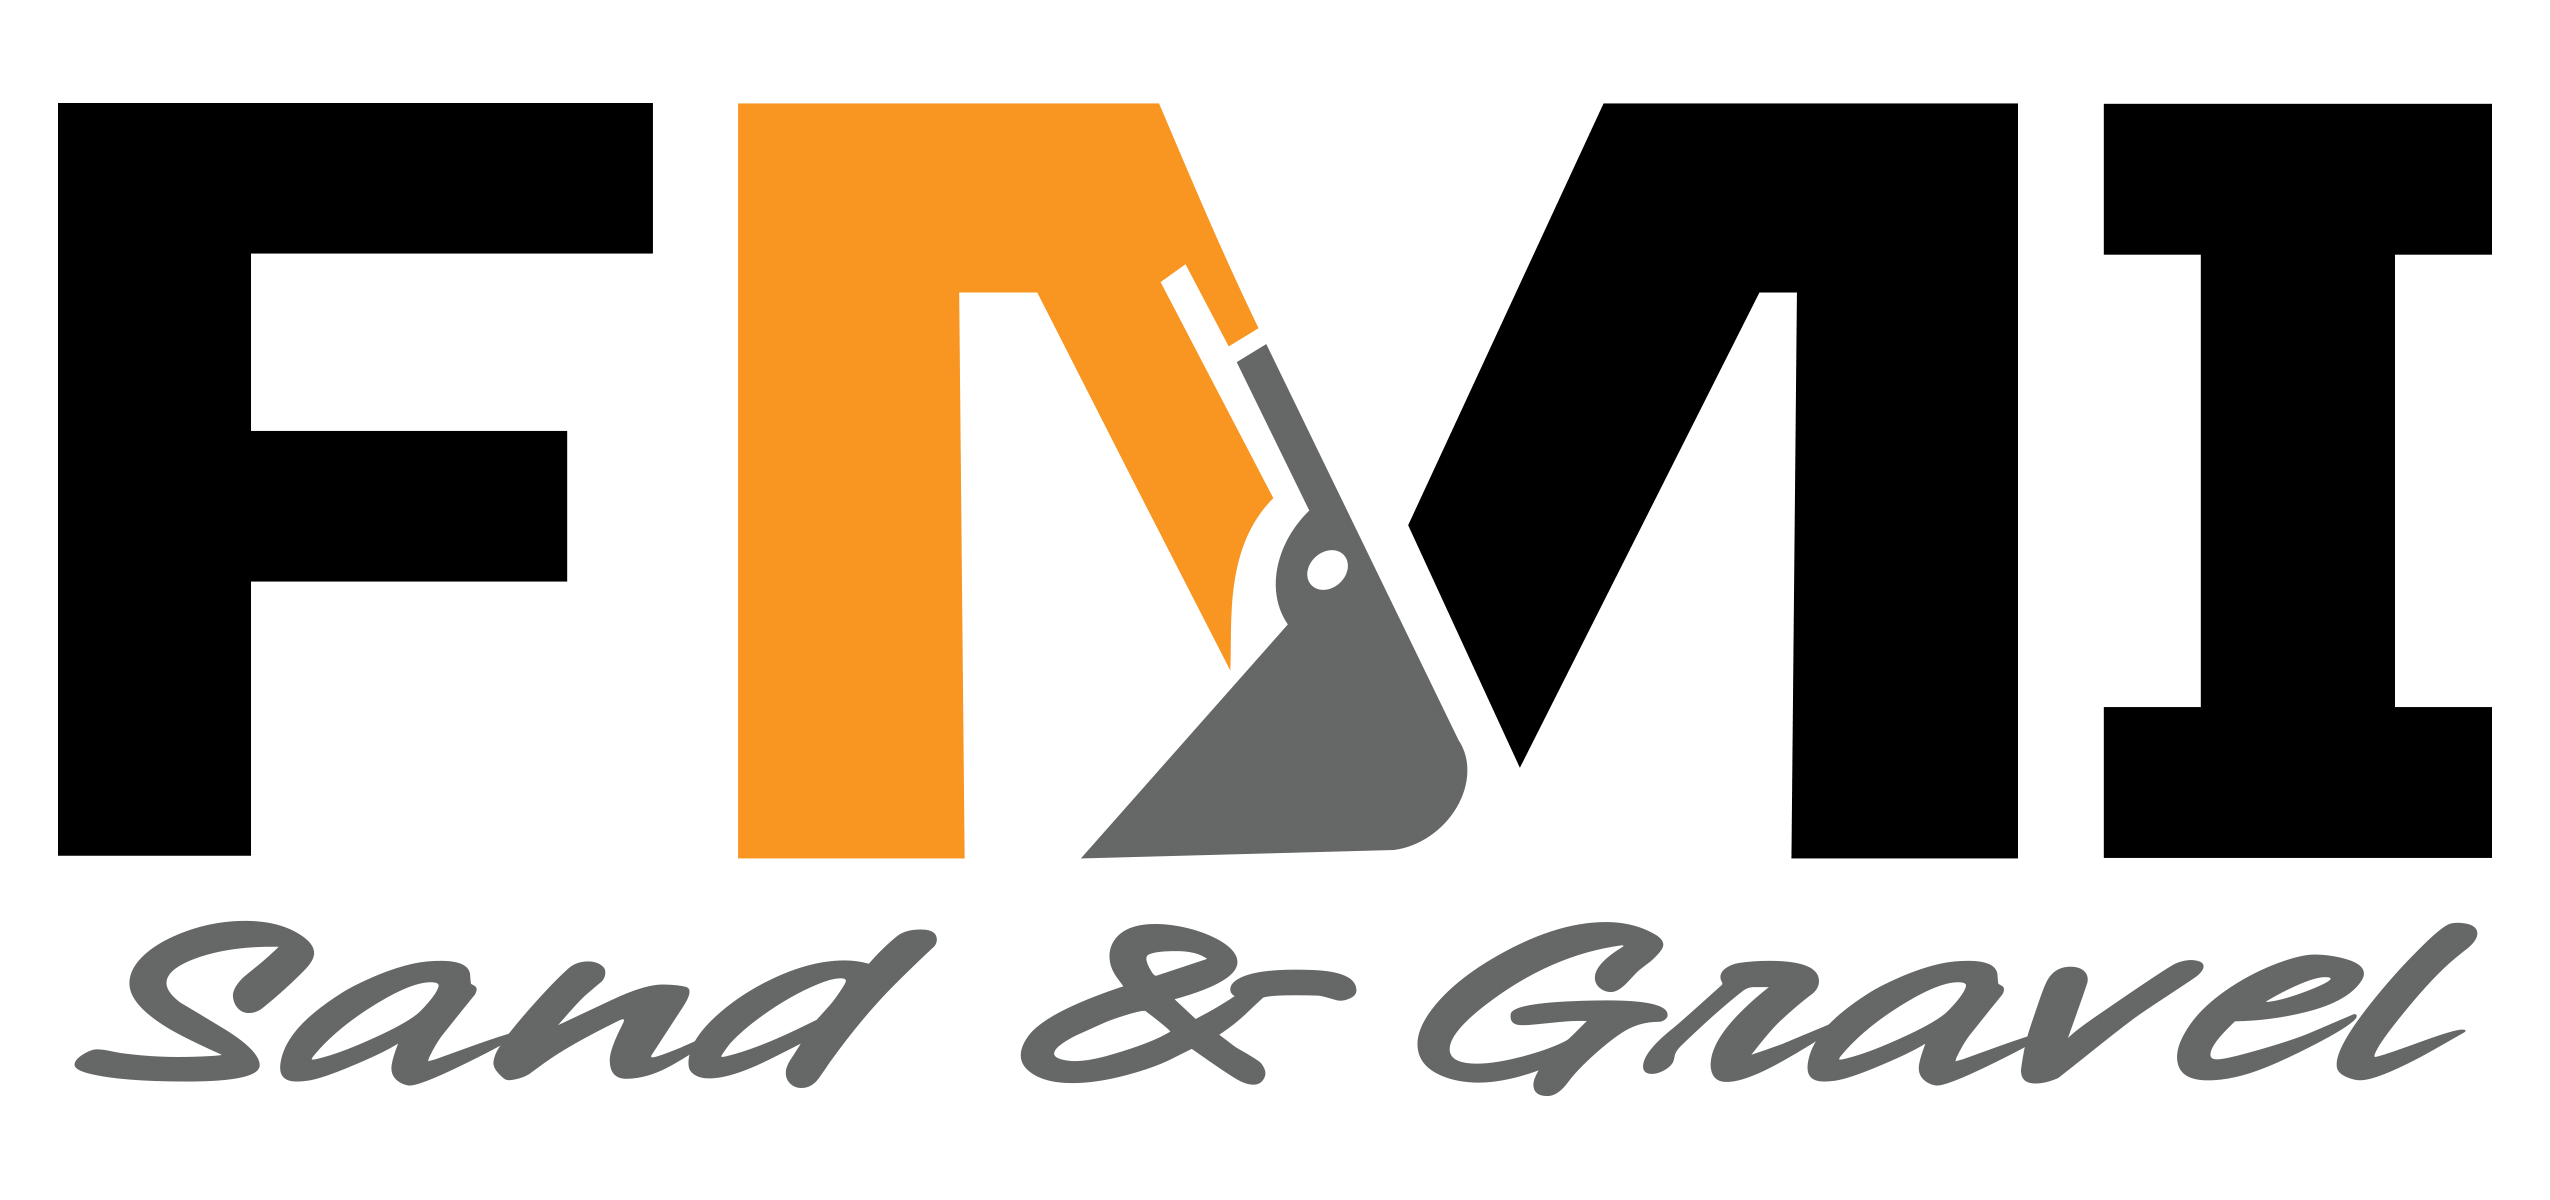 FMI-Sand-Gravel-Logo